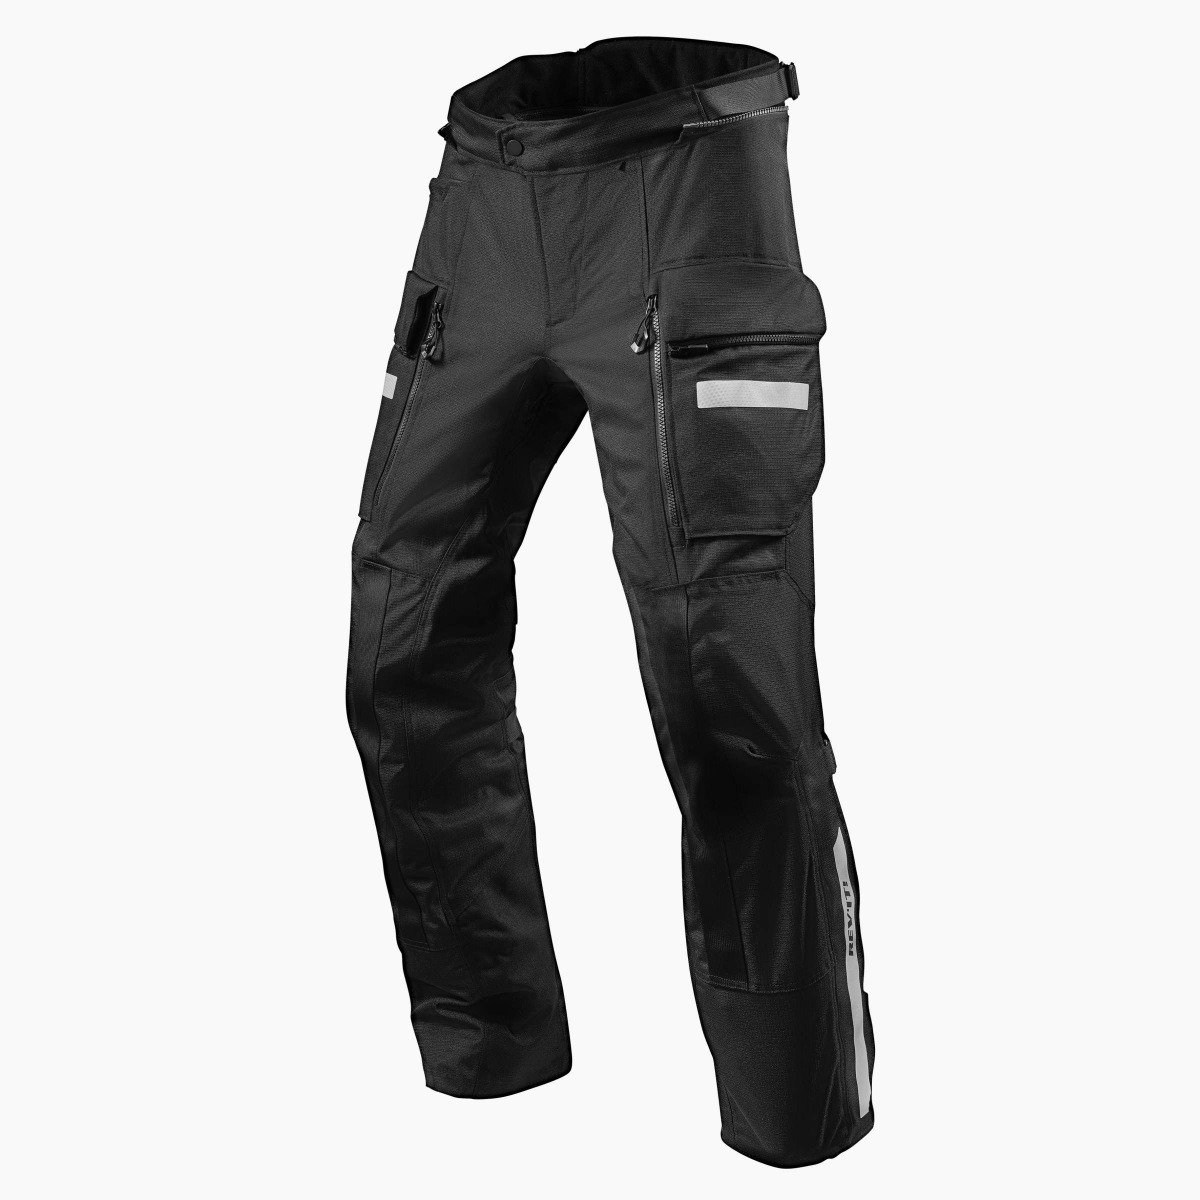 Image of REV'IT! Sand 4 H2O Standard Black Motorcycle Pants Talla M